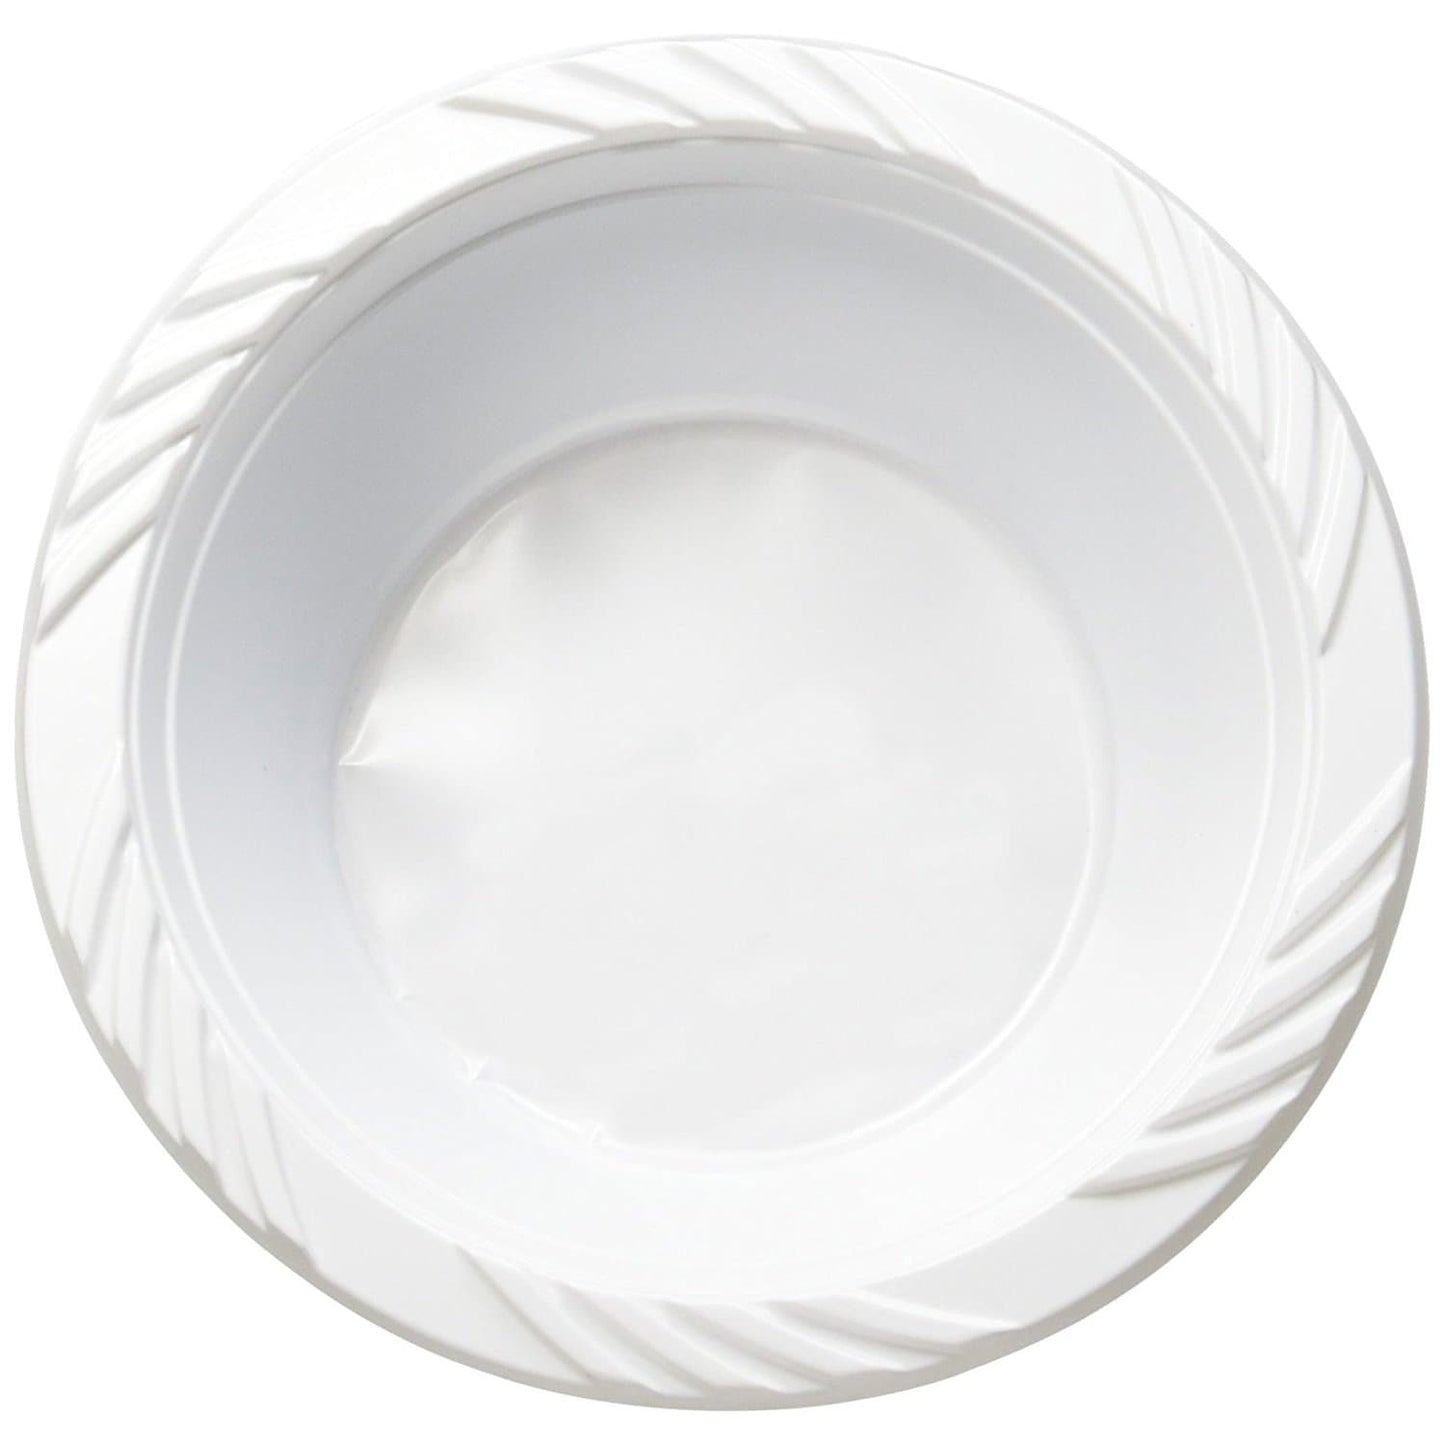 *WHOLESALE* 5 oz. Disposable and Lightweight White Dessert Bowls | 800 ct/case Bowls VeZee   